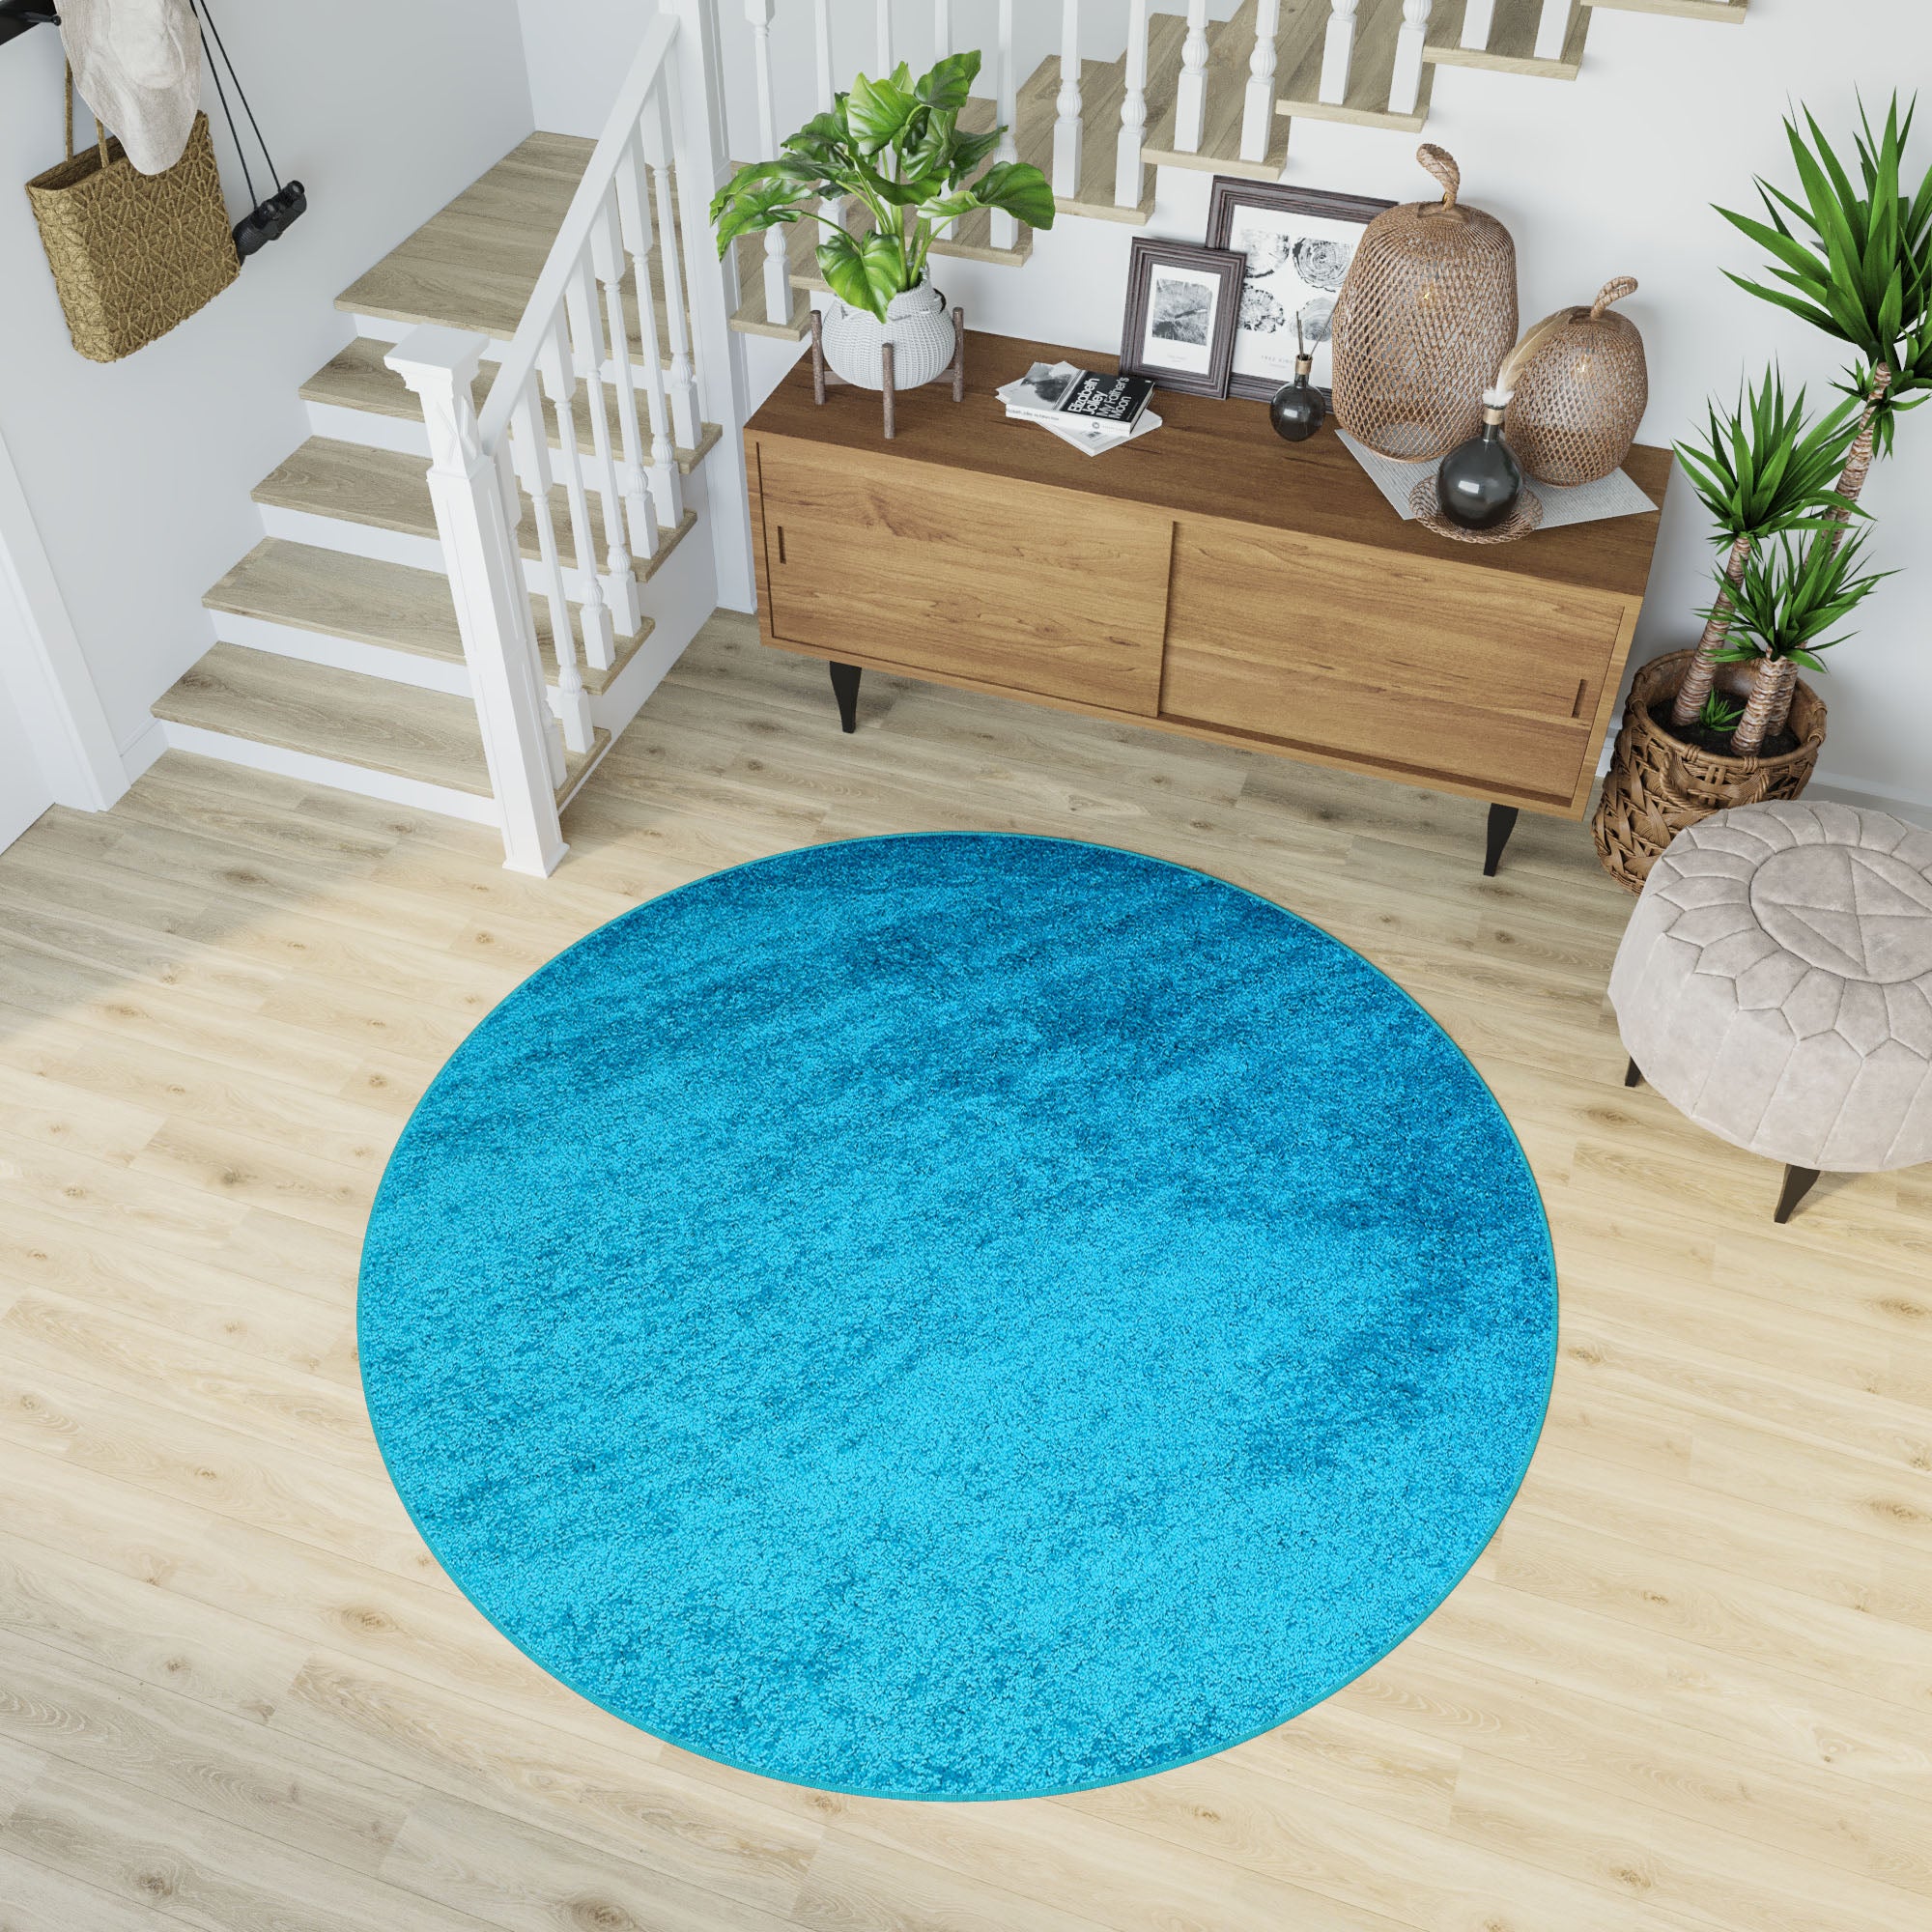 Elegir alfombras: ideas para alfombras redondas